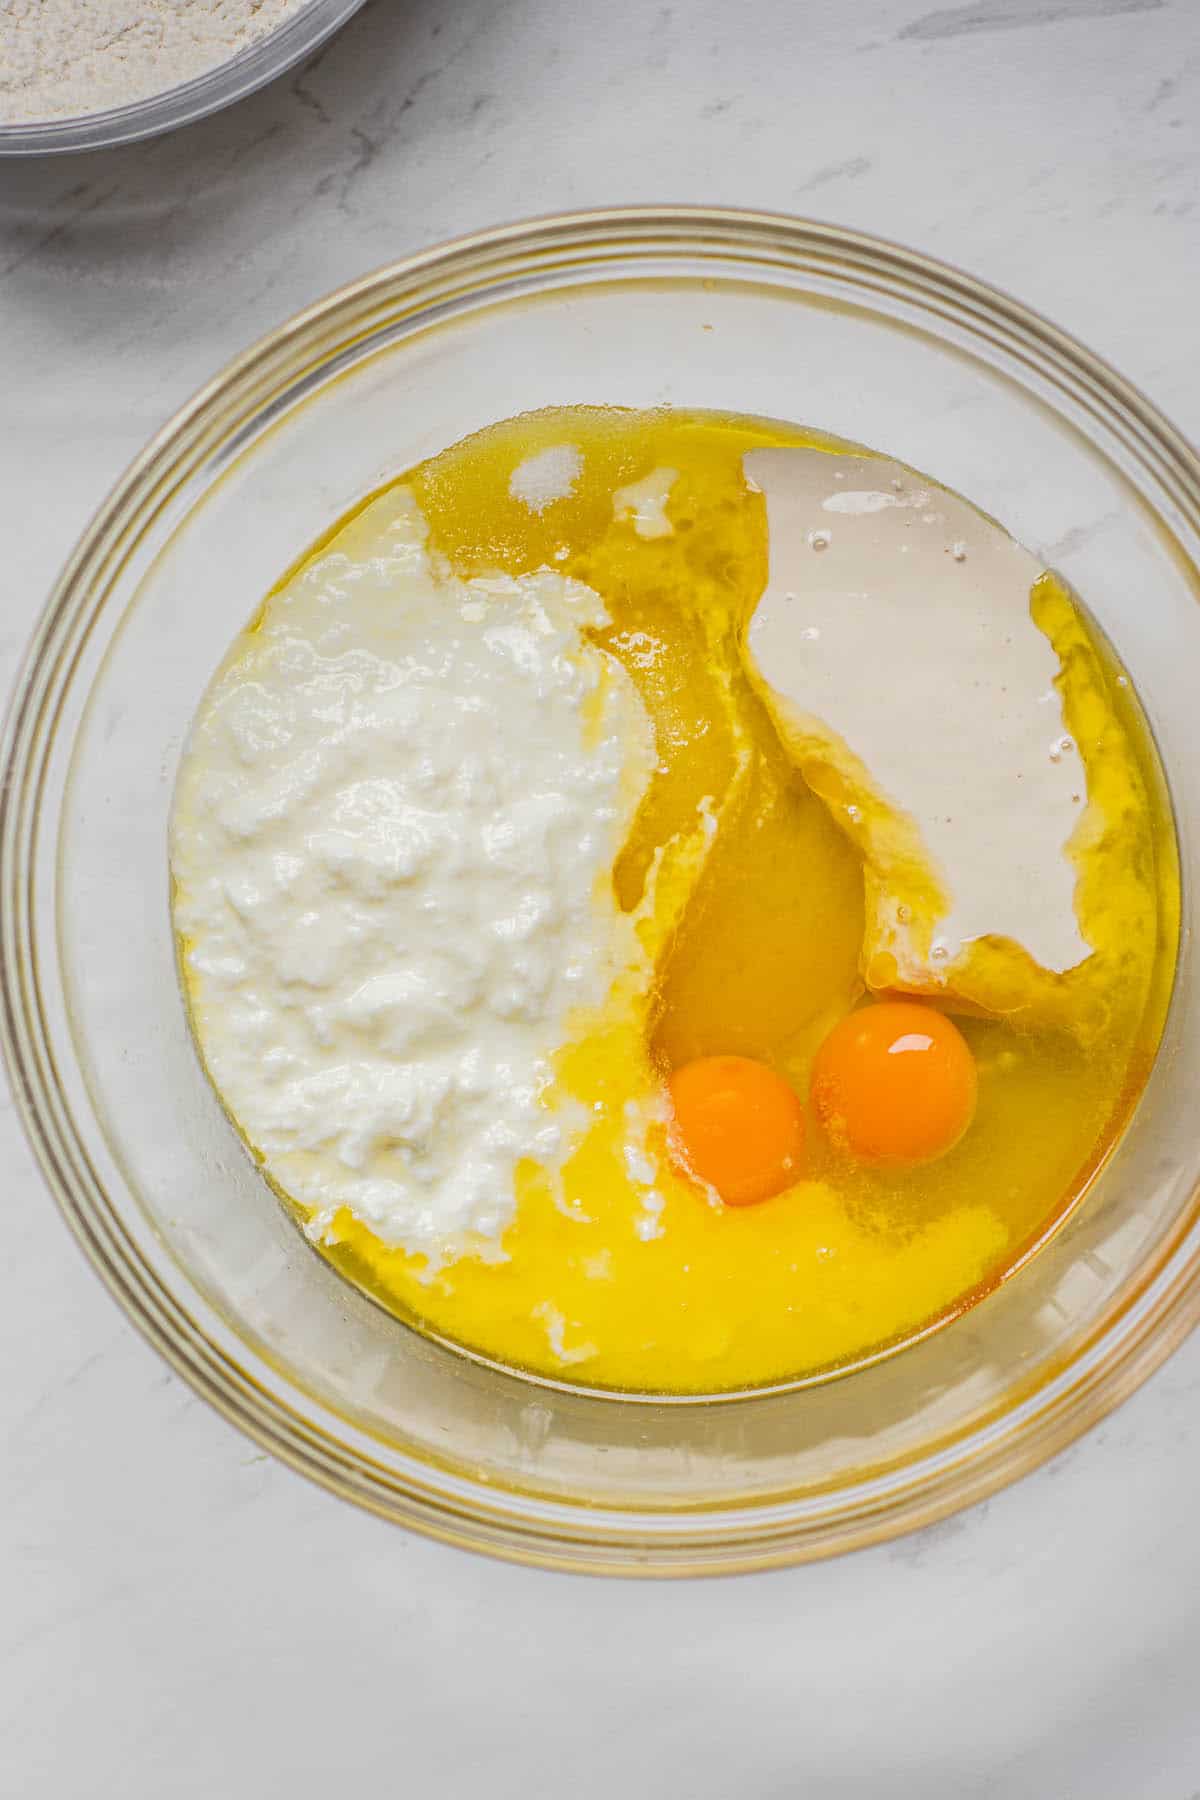 birds eye view of eggs, oil, butter and buttermilk.